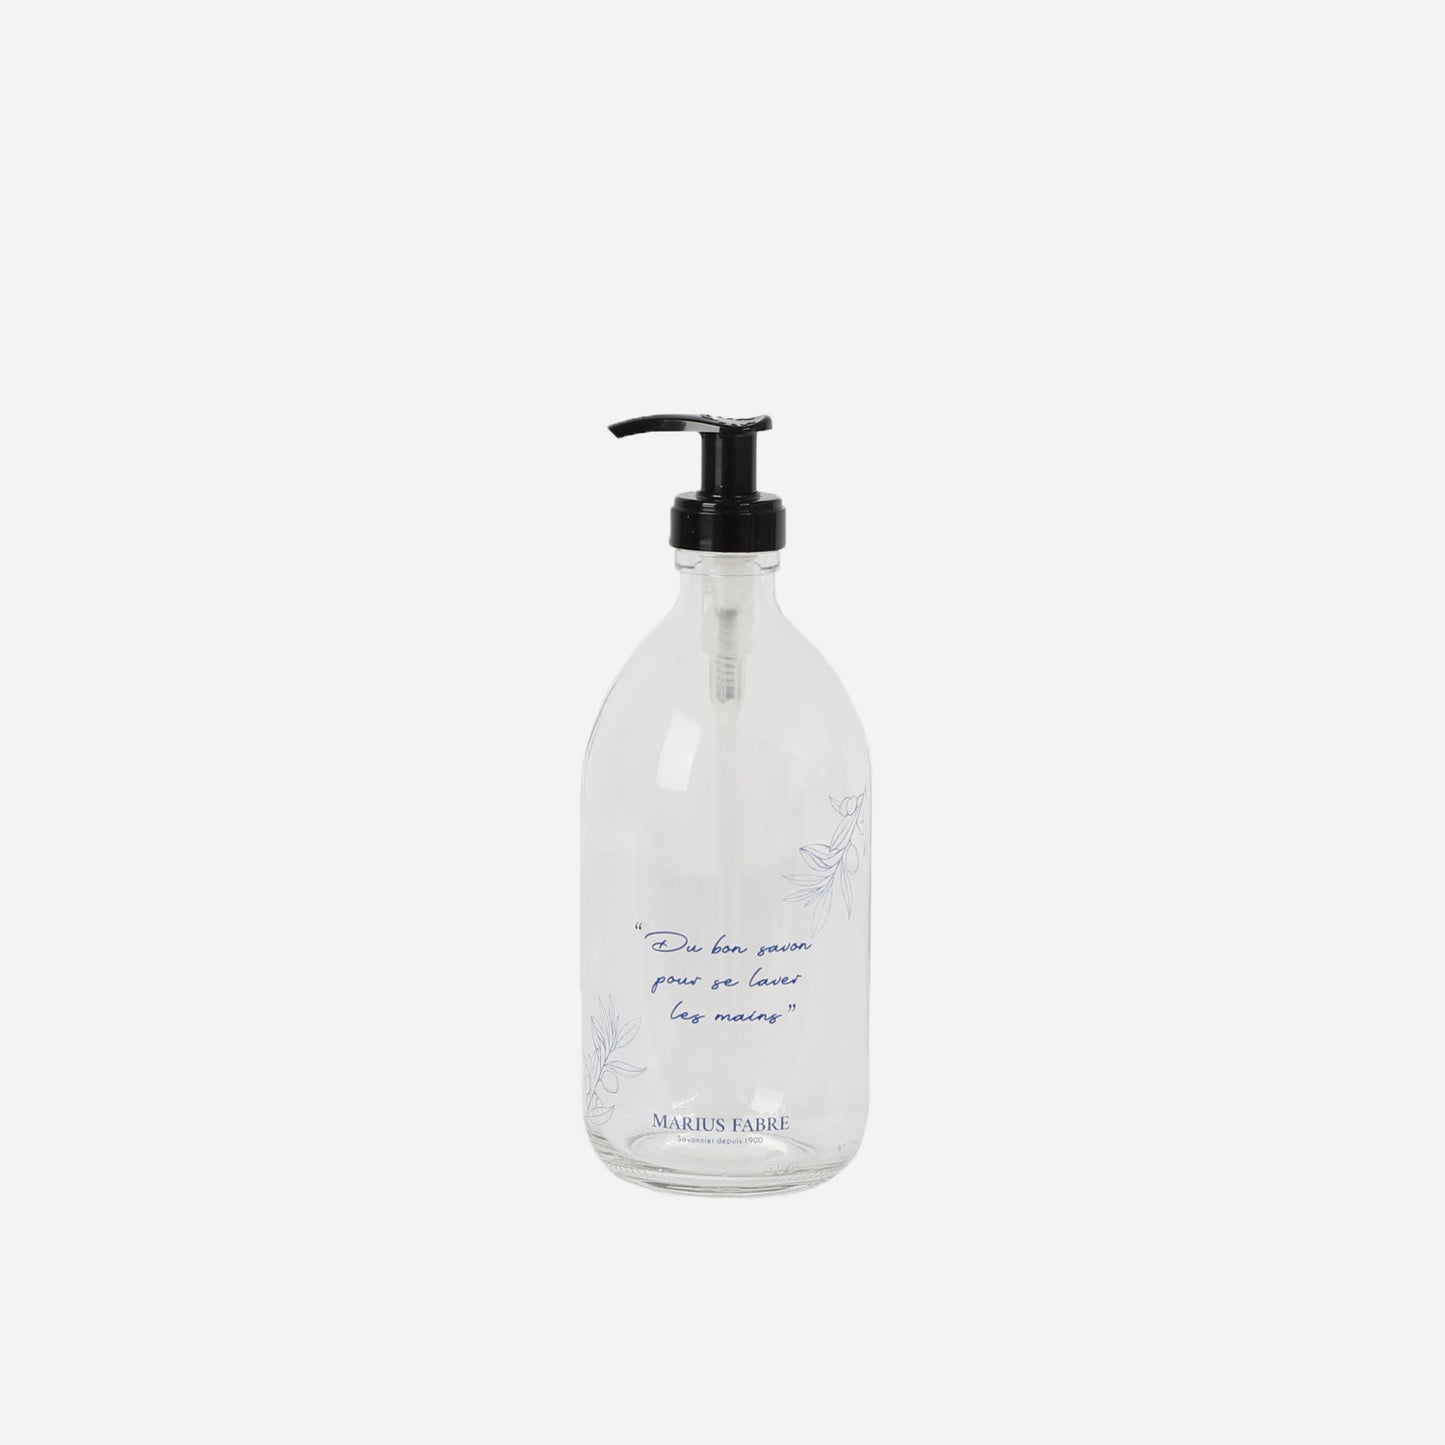 Glass bottle “Good soap for washing hands”, 500ml